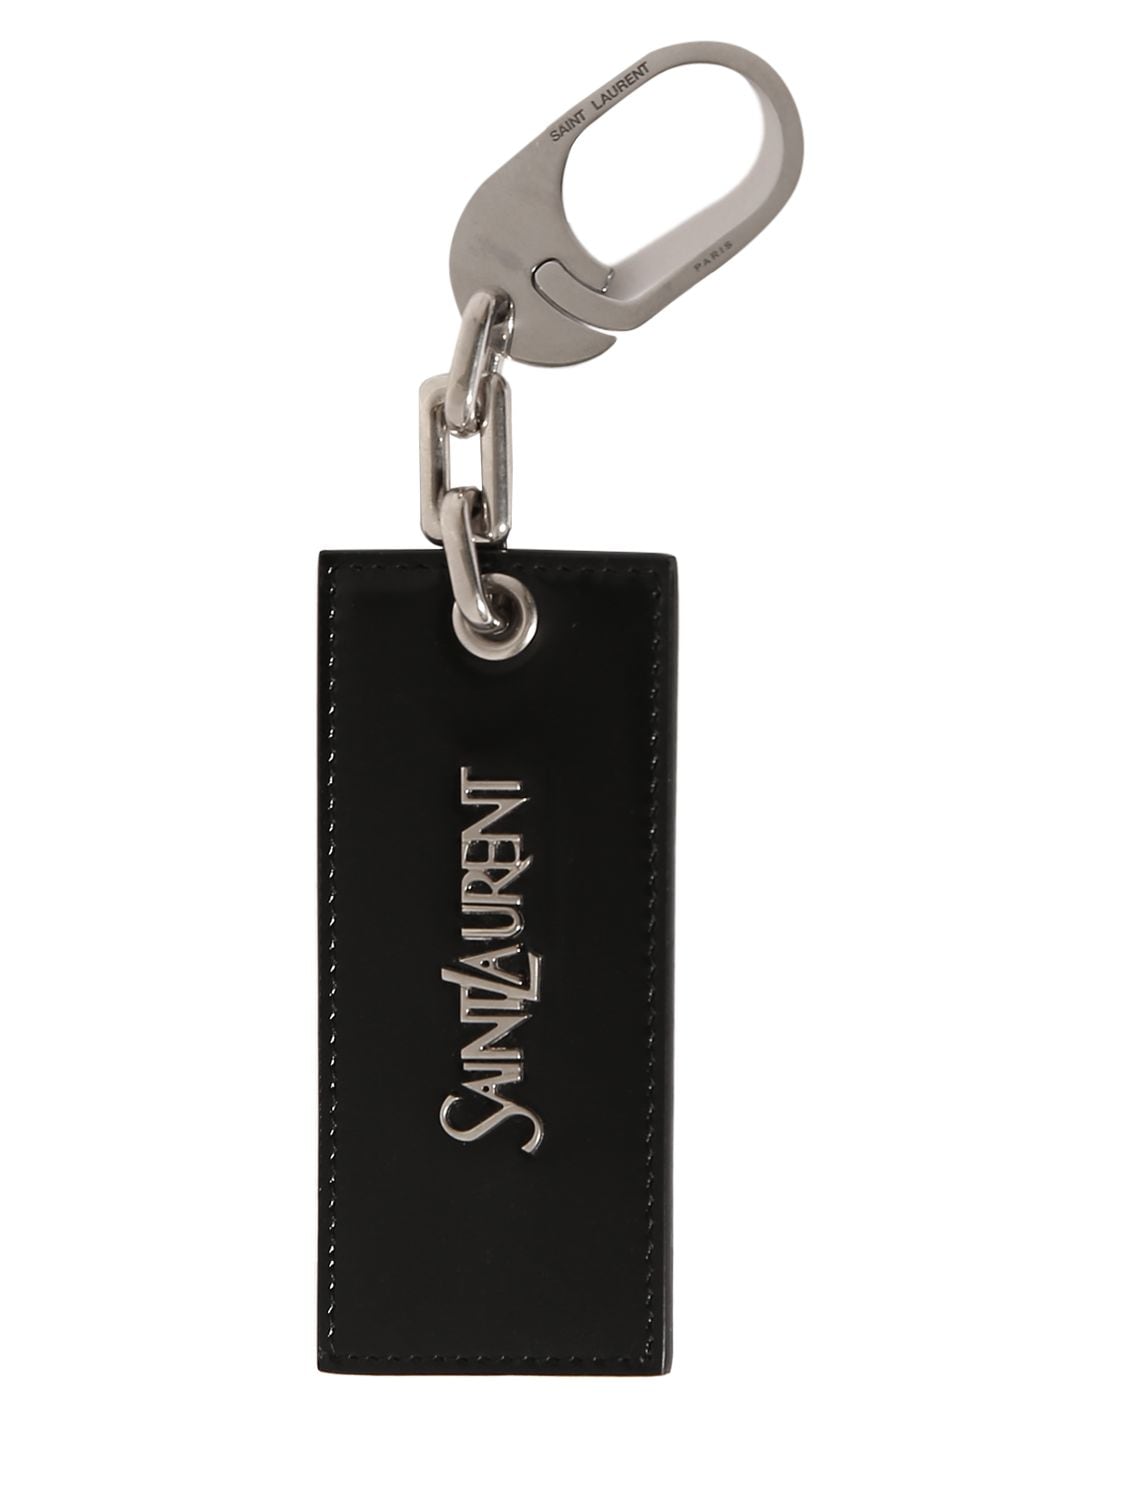 SAINT LAURENT: key ring in leather with monogram - Black  Saint Laurent  keyring 518323 0SX0E online at